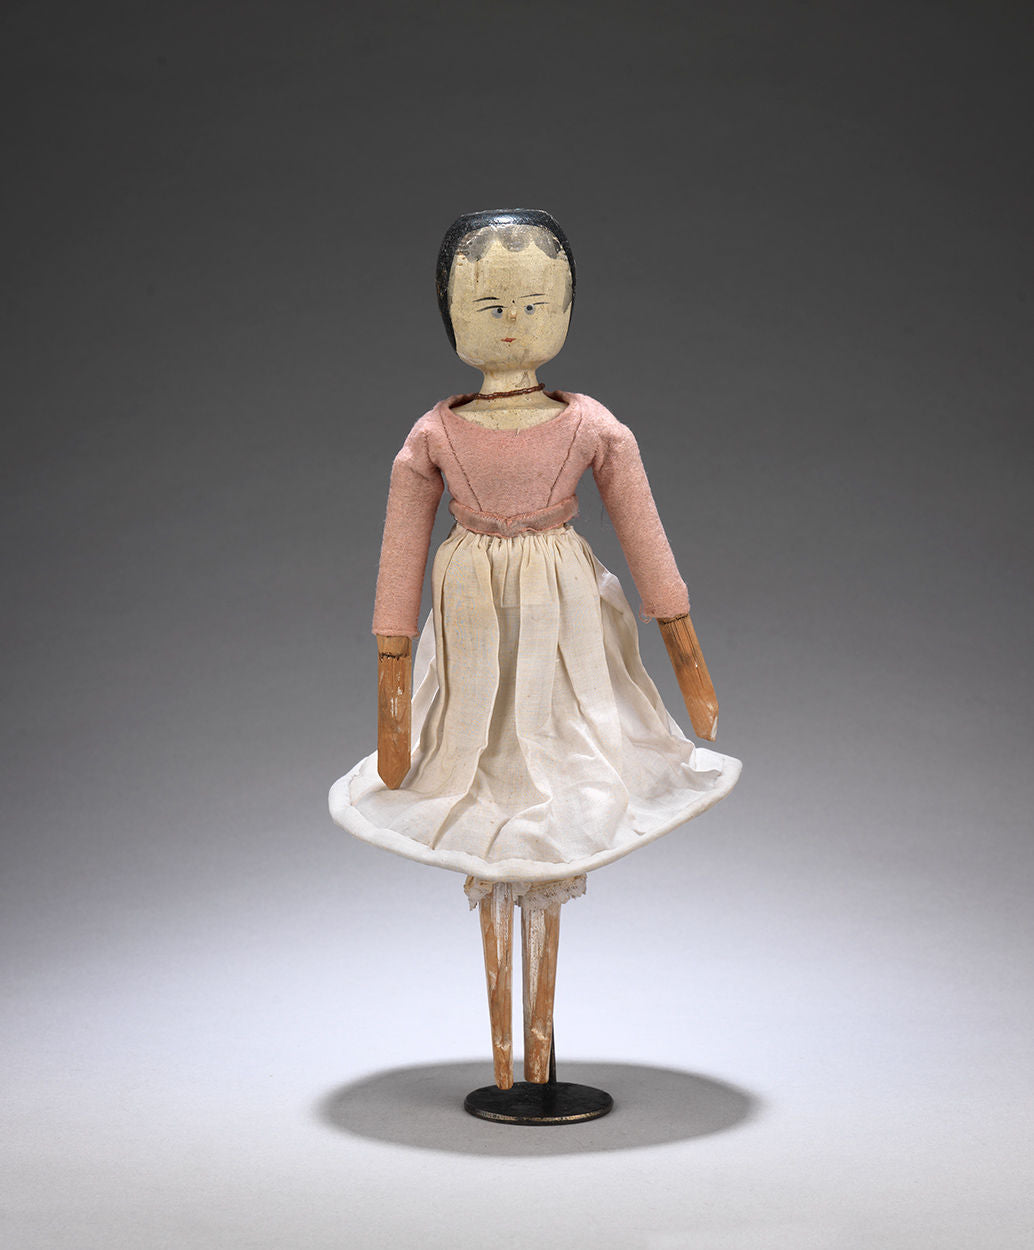 Traditional 19th Century "Peg" Doll